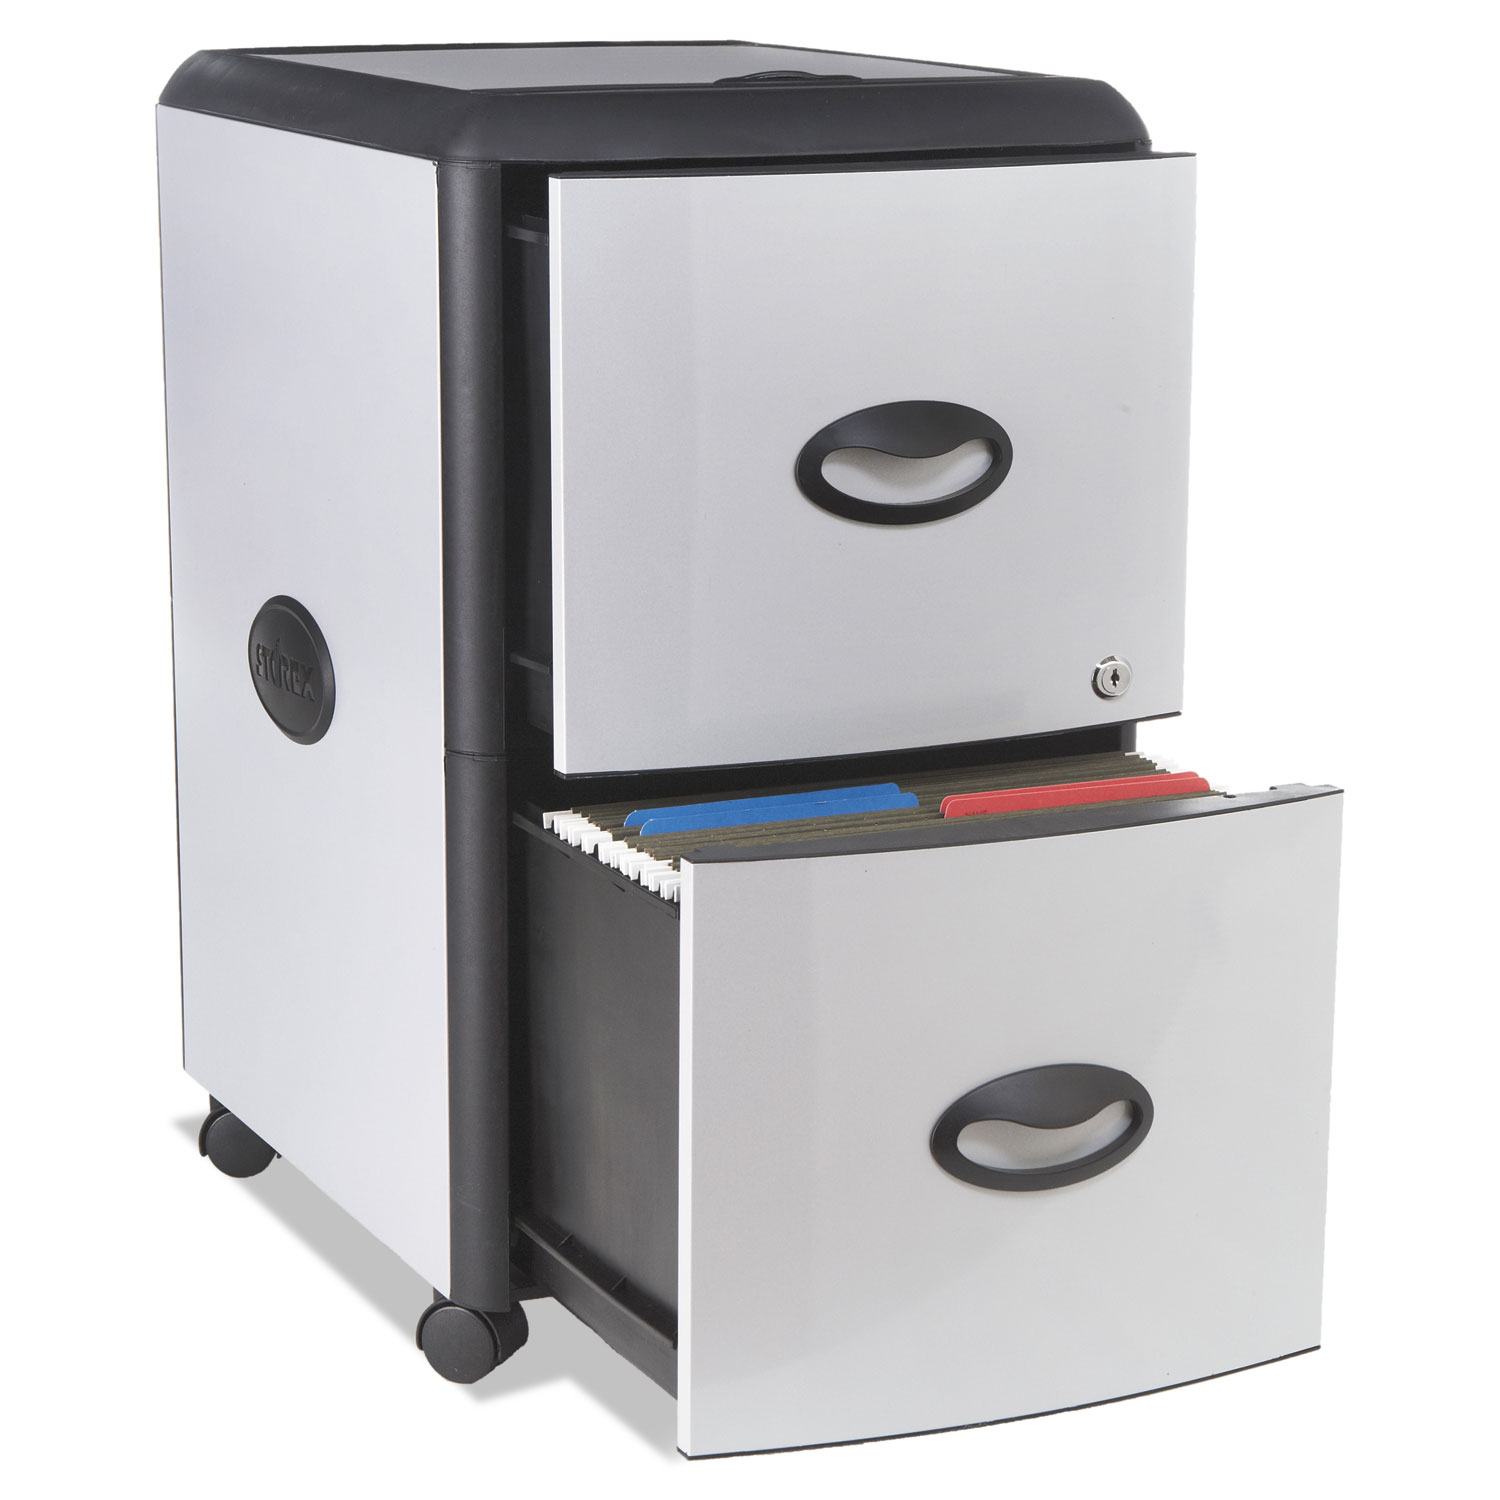  Storex 61352U01C Two-Drawer Mobile Filing Cabinet with Metal Siding, 19w x 15d x 23h, Silver/Black (STX61352U01C) 